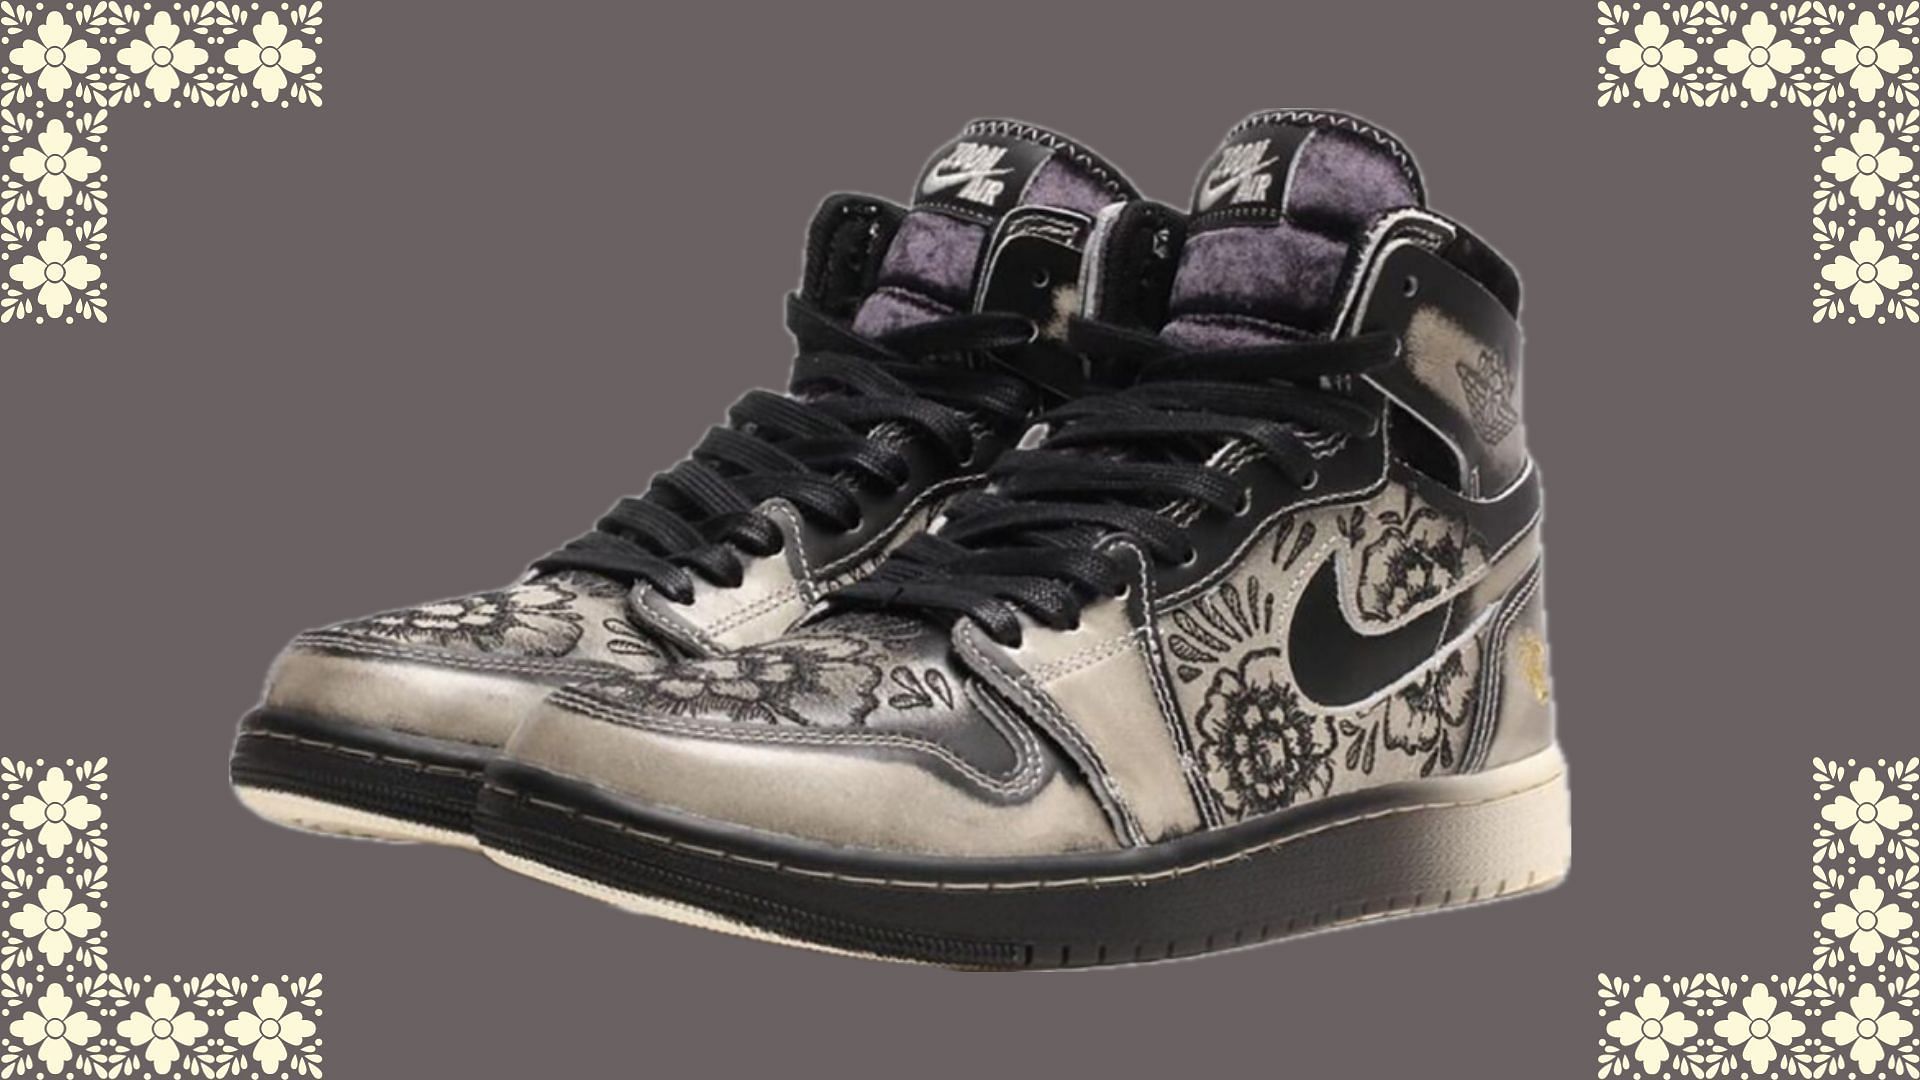 Air Jordan 1 High Zoom CMFT 2 Familia sneakers (Image via Instagram/@titoloshop)